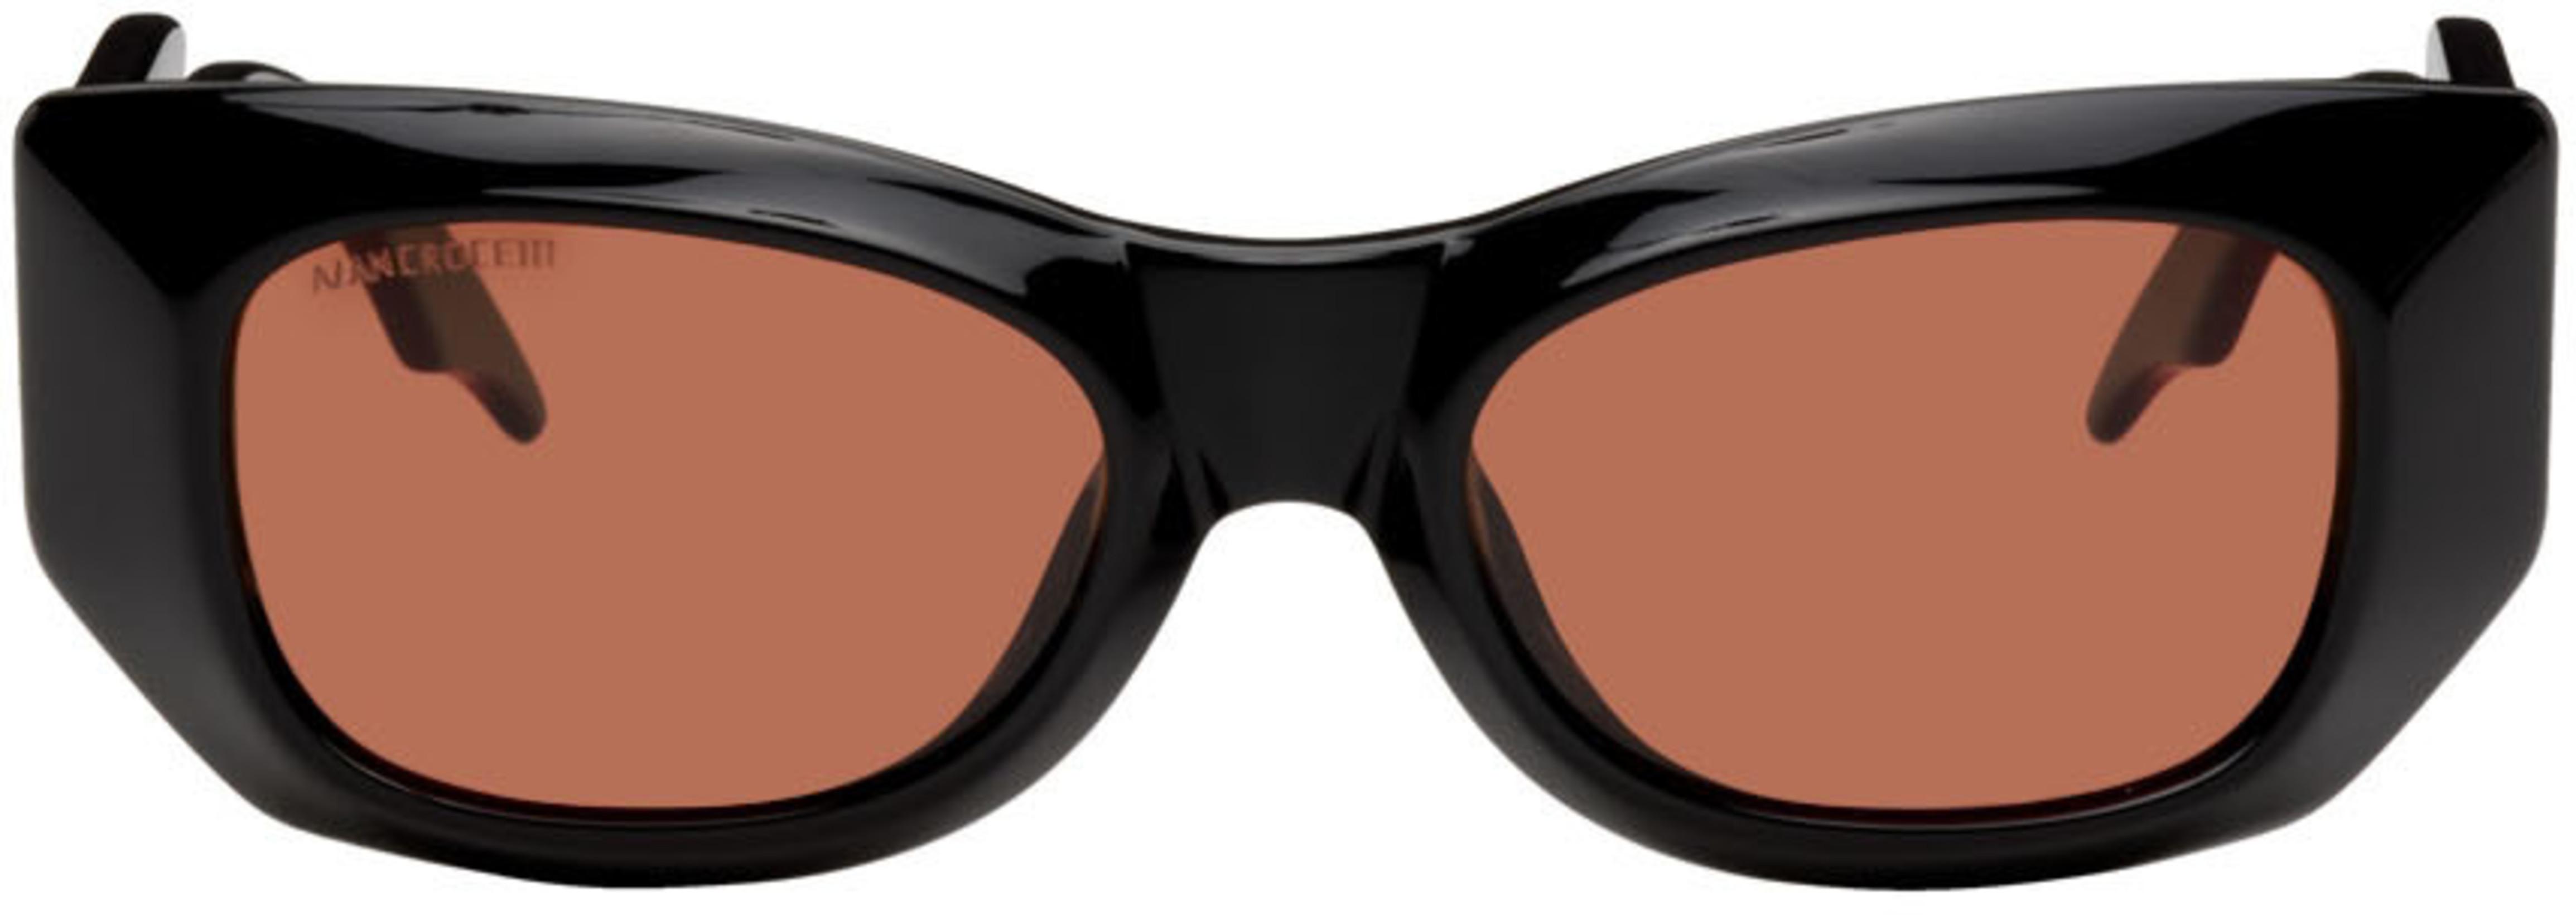 SSENSE Exclusive Orange Shark Sunglasses by ALAN CROCETTI